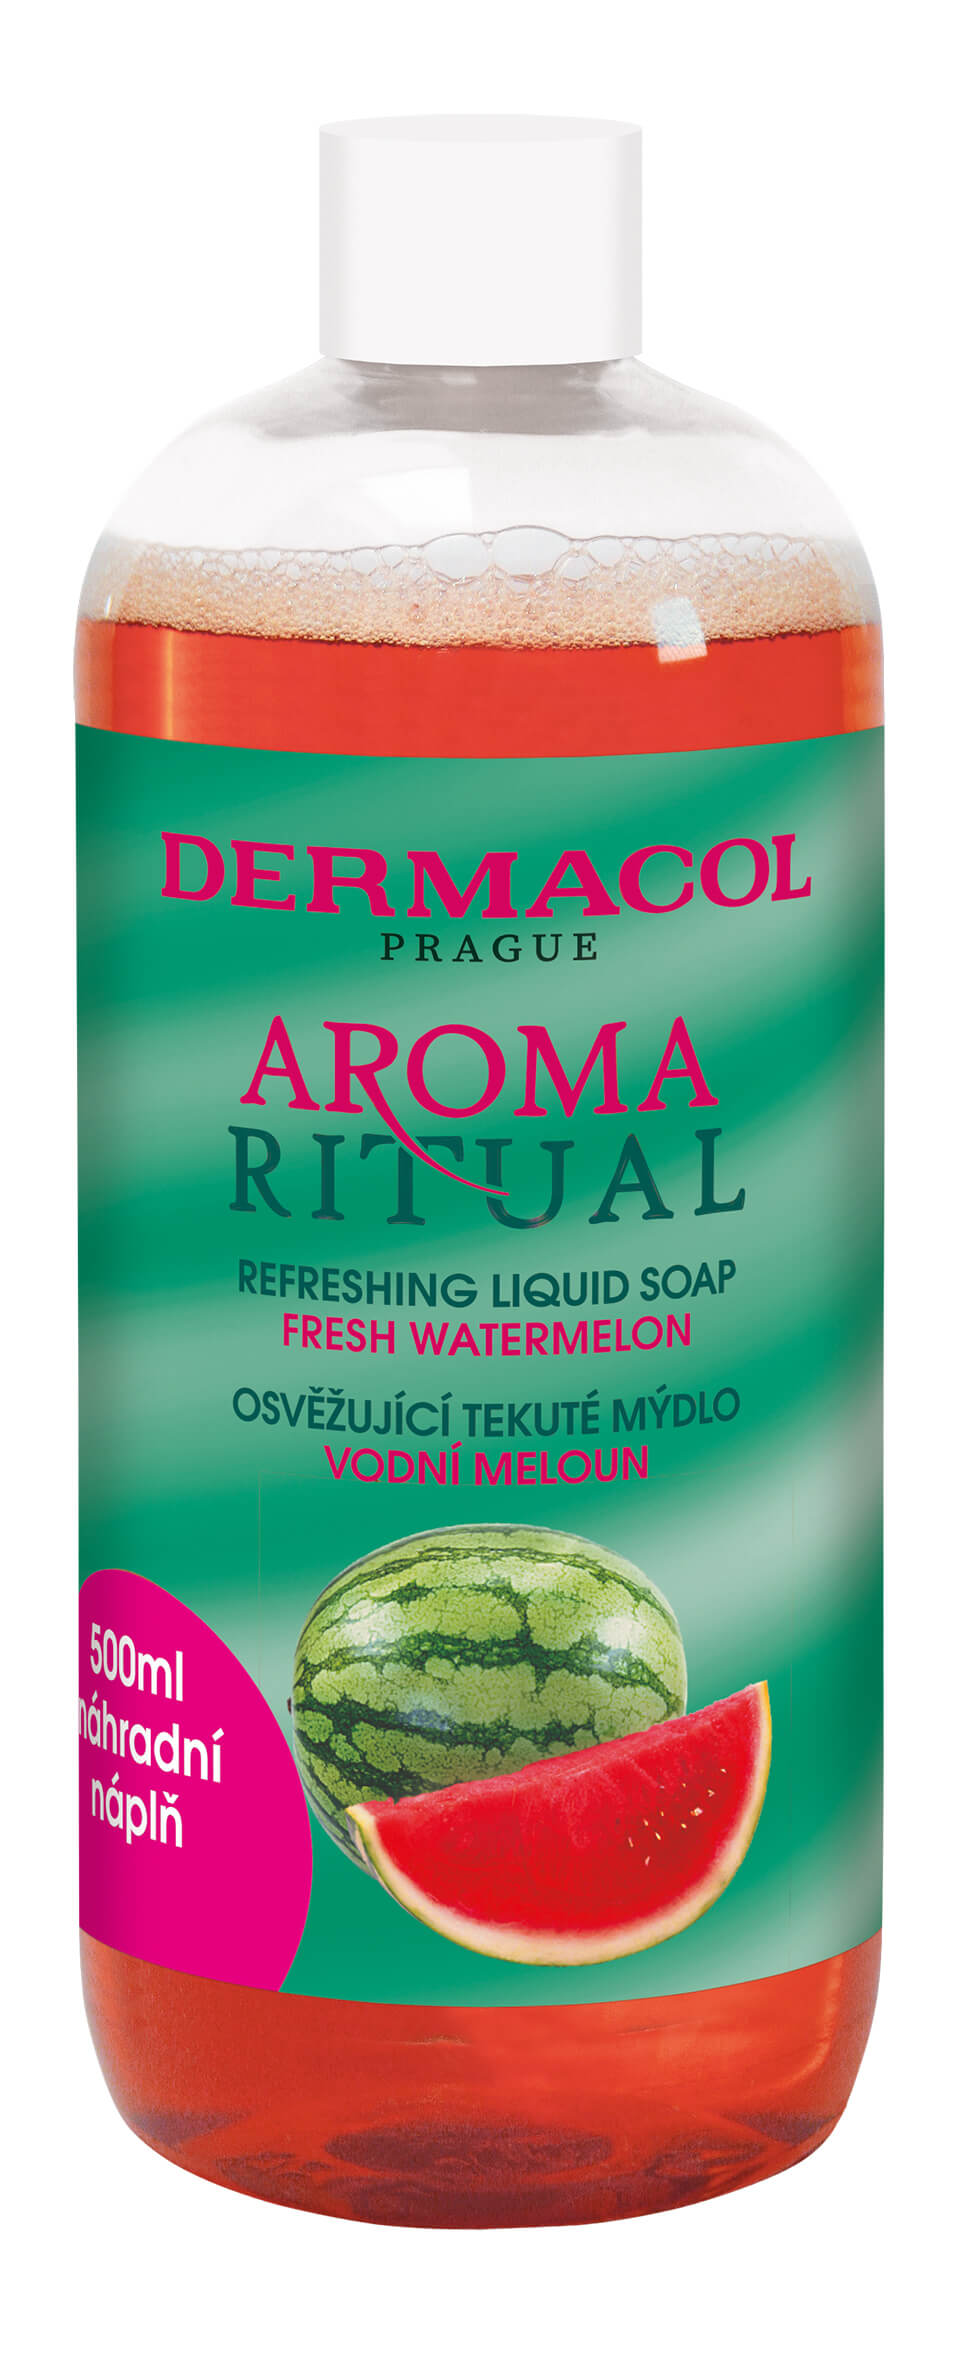 Osviežujúci tekuté mydlo Vodné Melón Aroma Ritual (Refreshing Liquid Soap) - náhradná náplň 500 ml